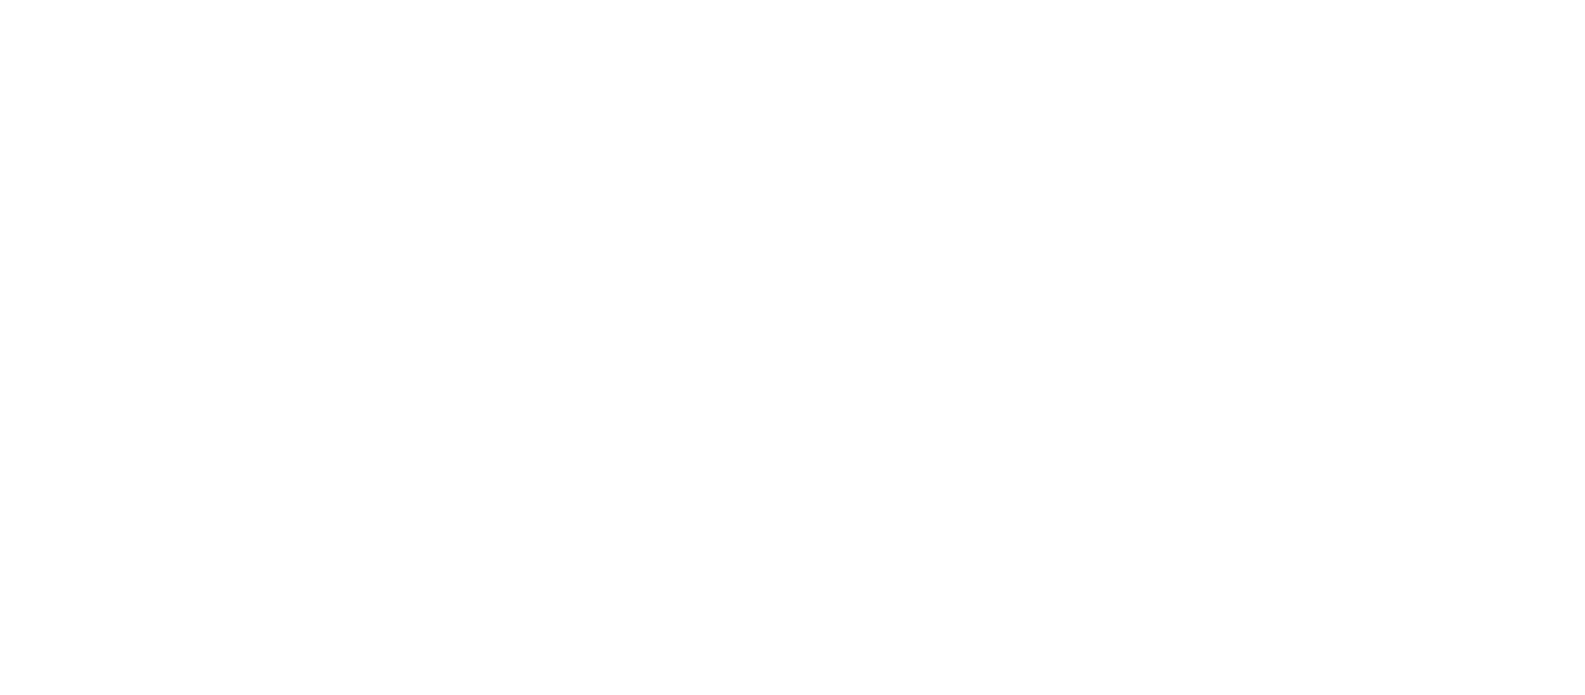 Café de Coral logo large for dark backgrounds (transparent PNG)